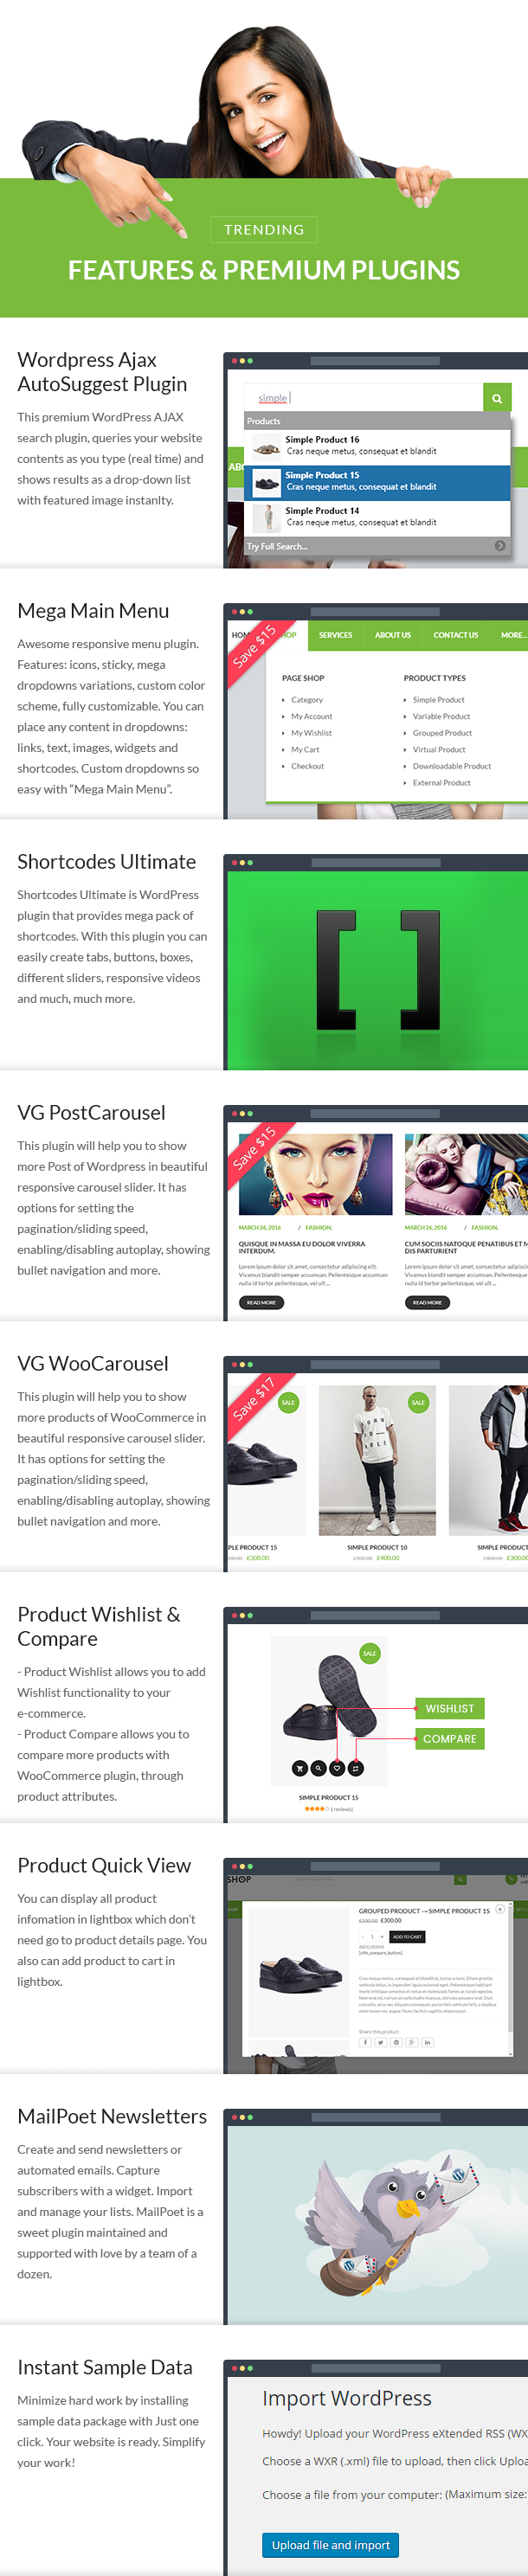 VG JanShop - Responsive WooCommerce WordPress Theme - 13